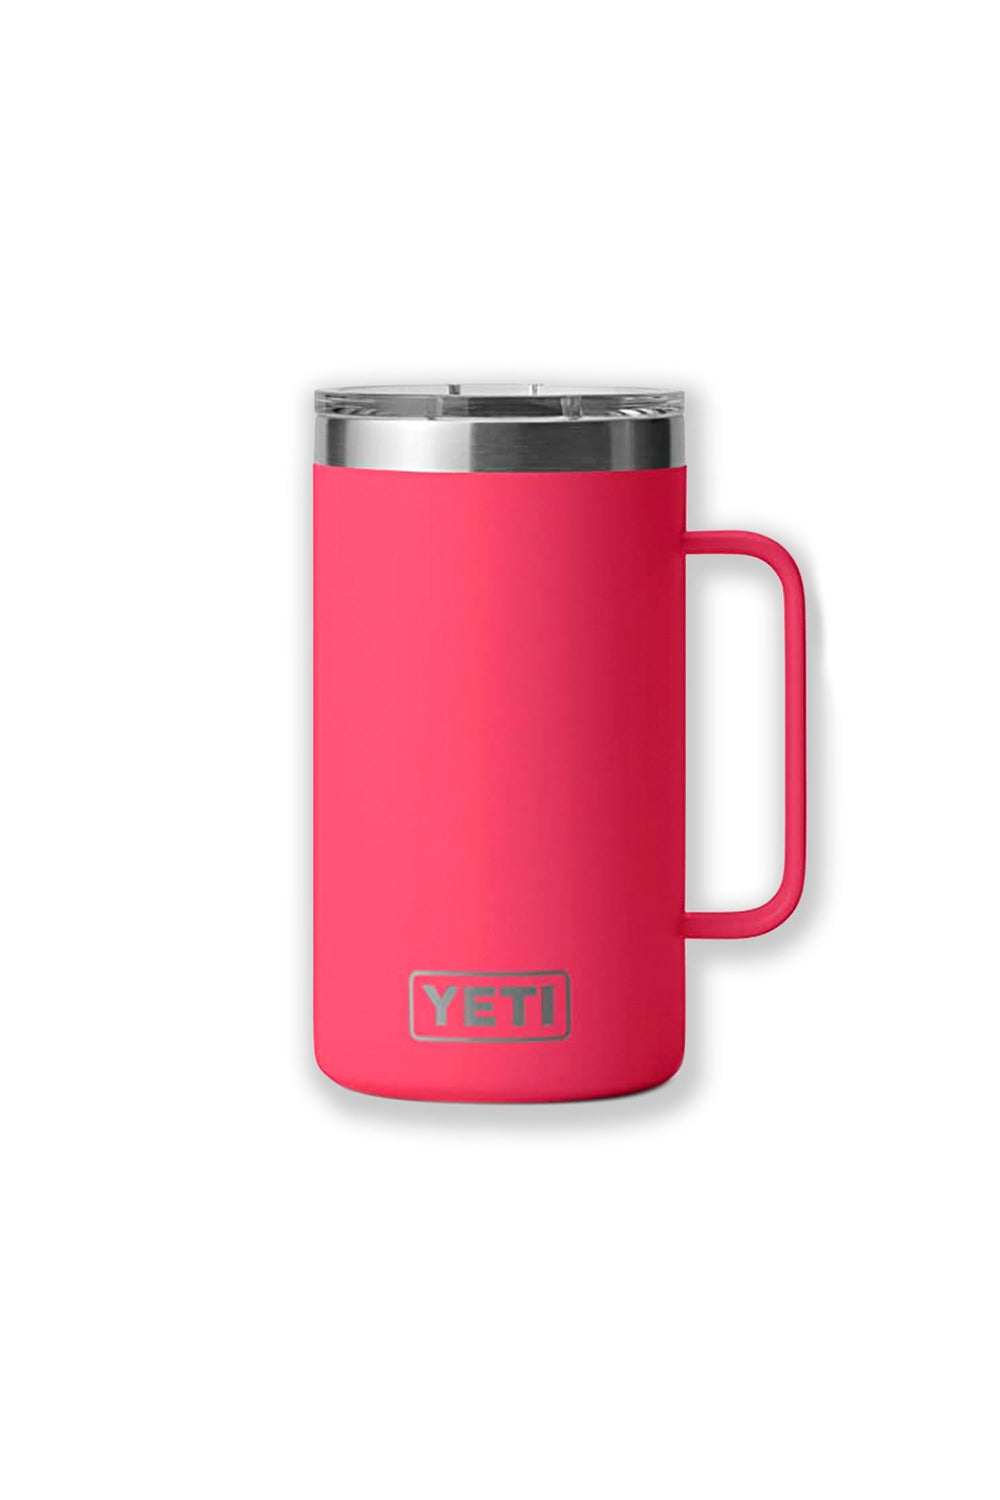 Custom Travel Coffee Mug - 14 oz Red Stainless Steel Mug with Handle